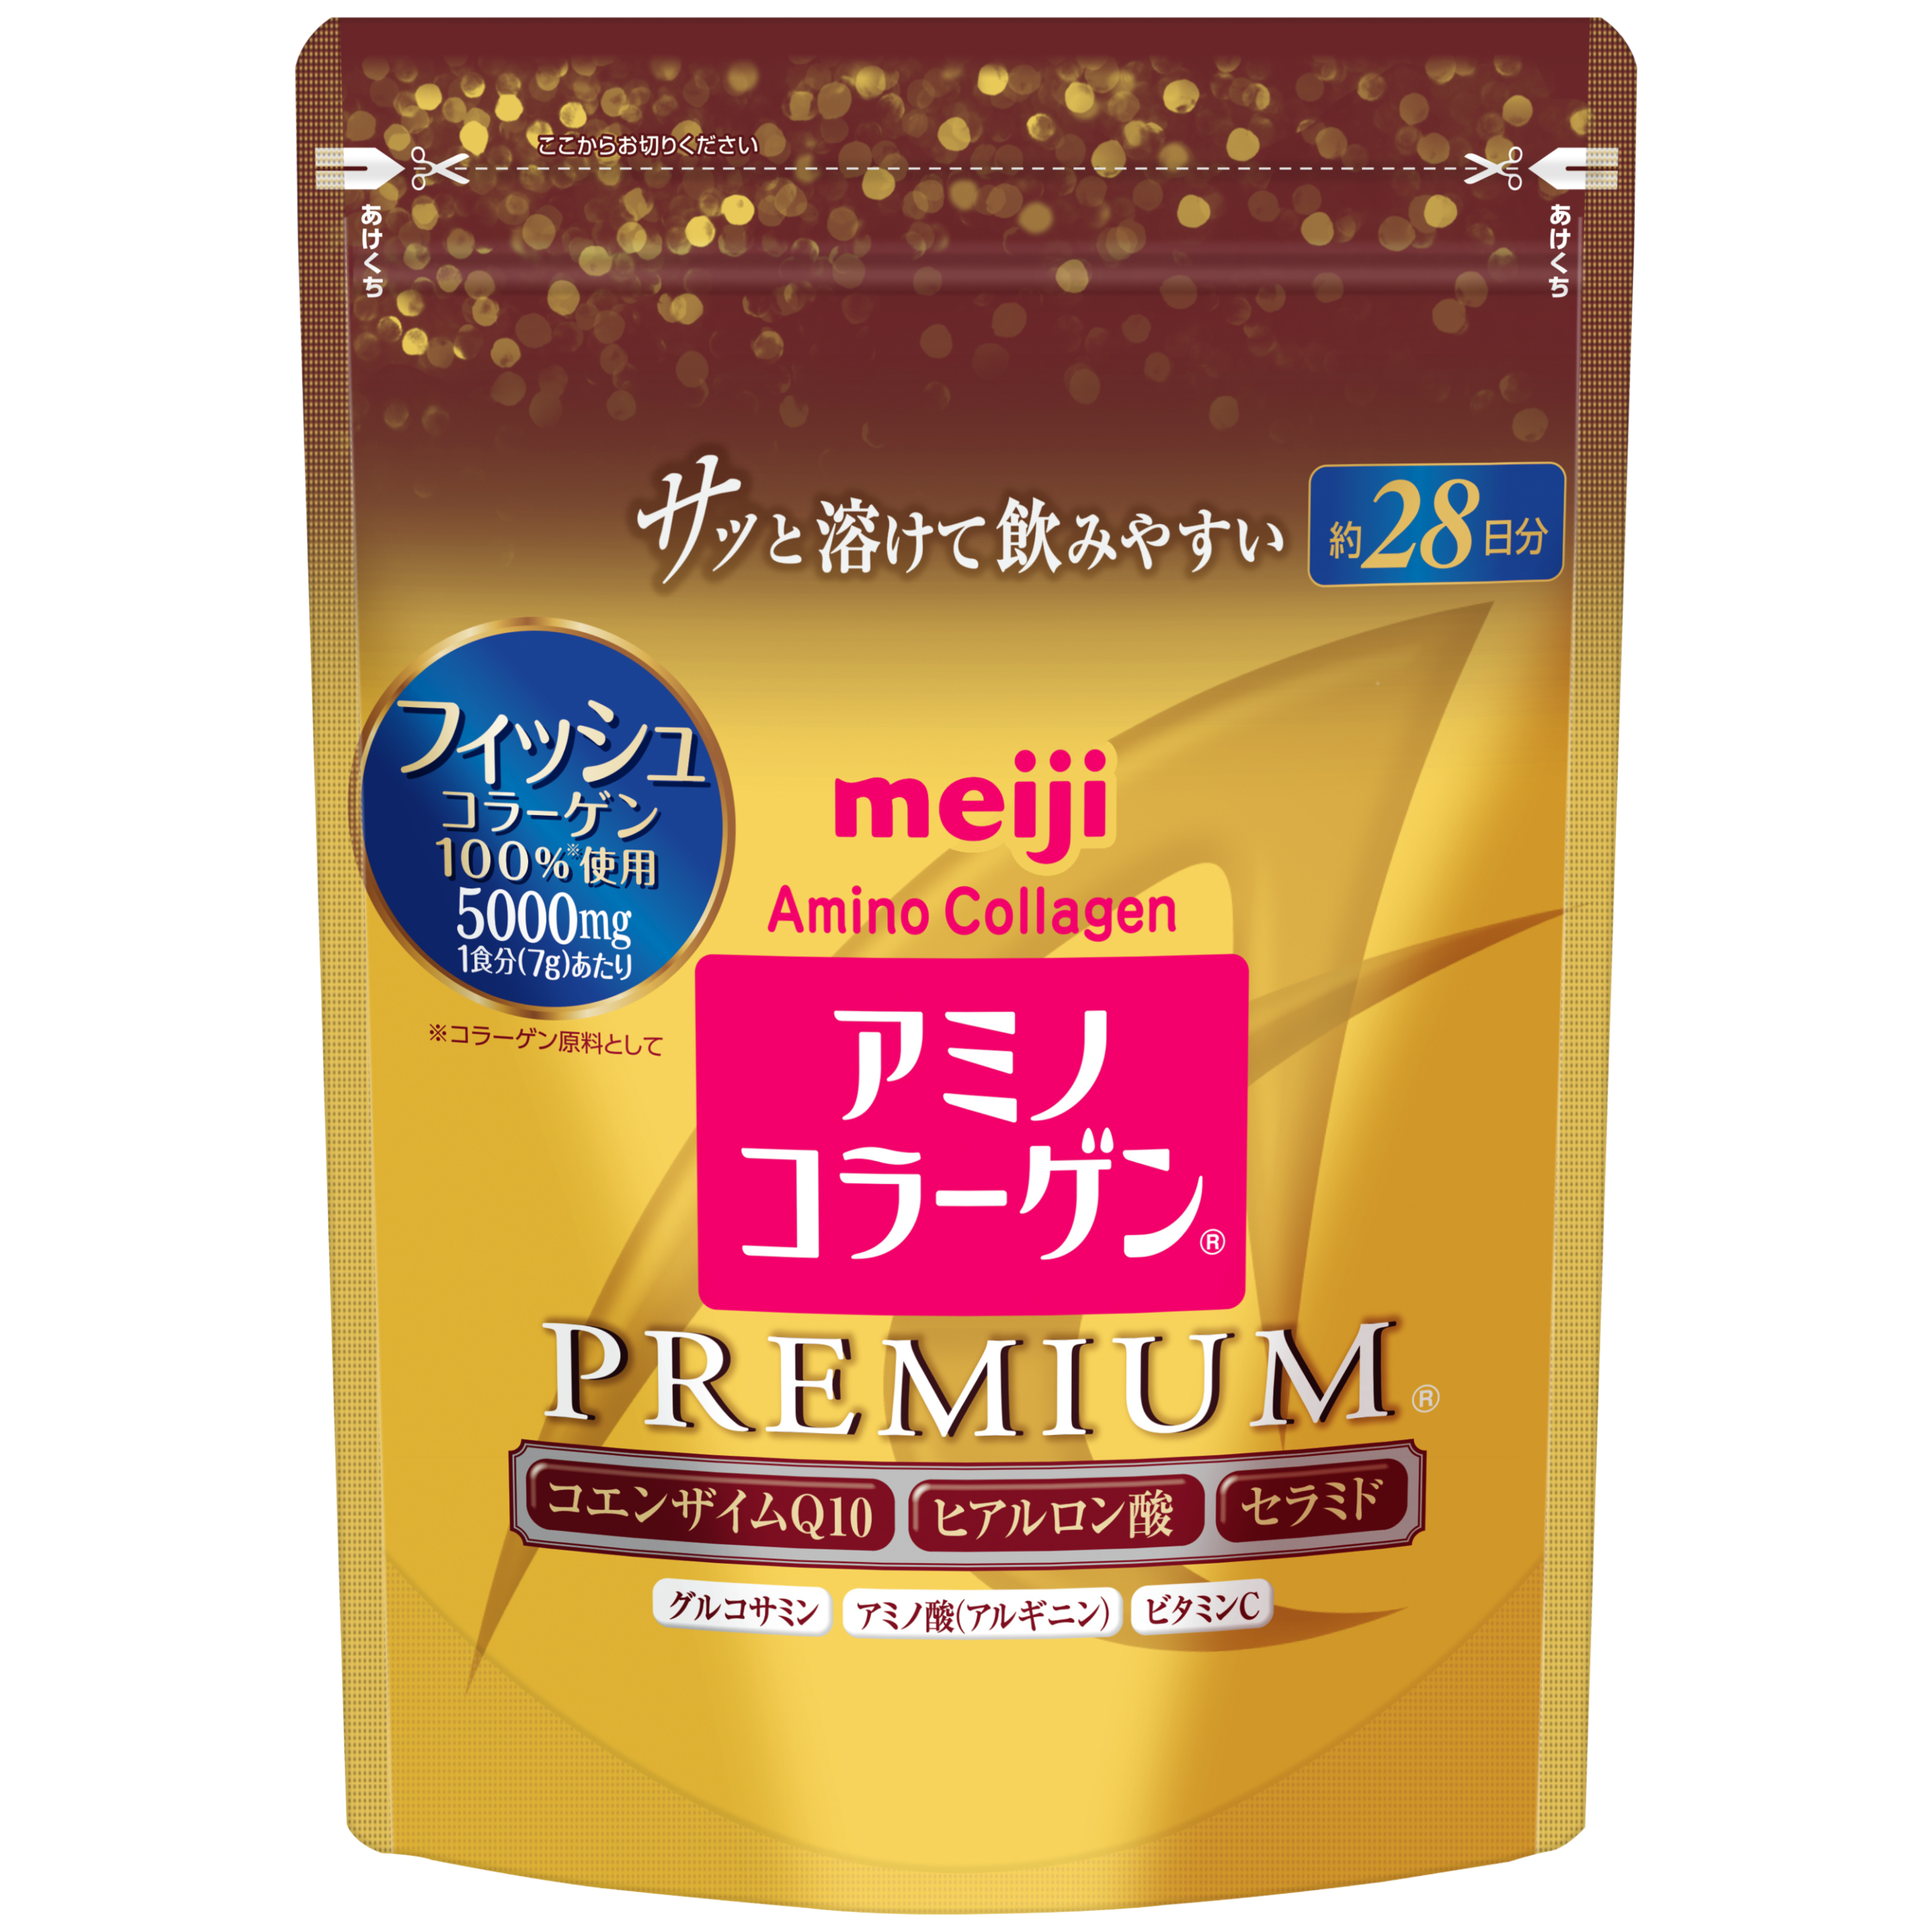 Meiji Amino Collagen          明治氨基膠原蛋白Premium 196克